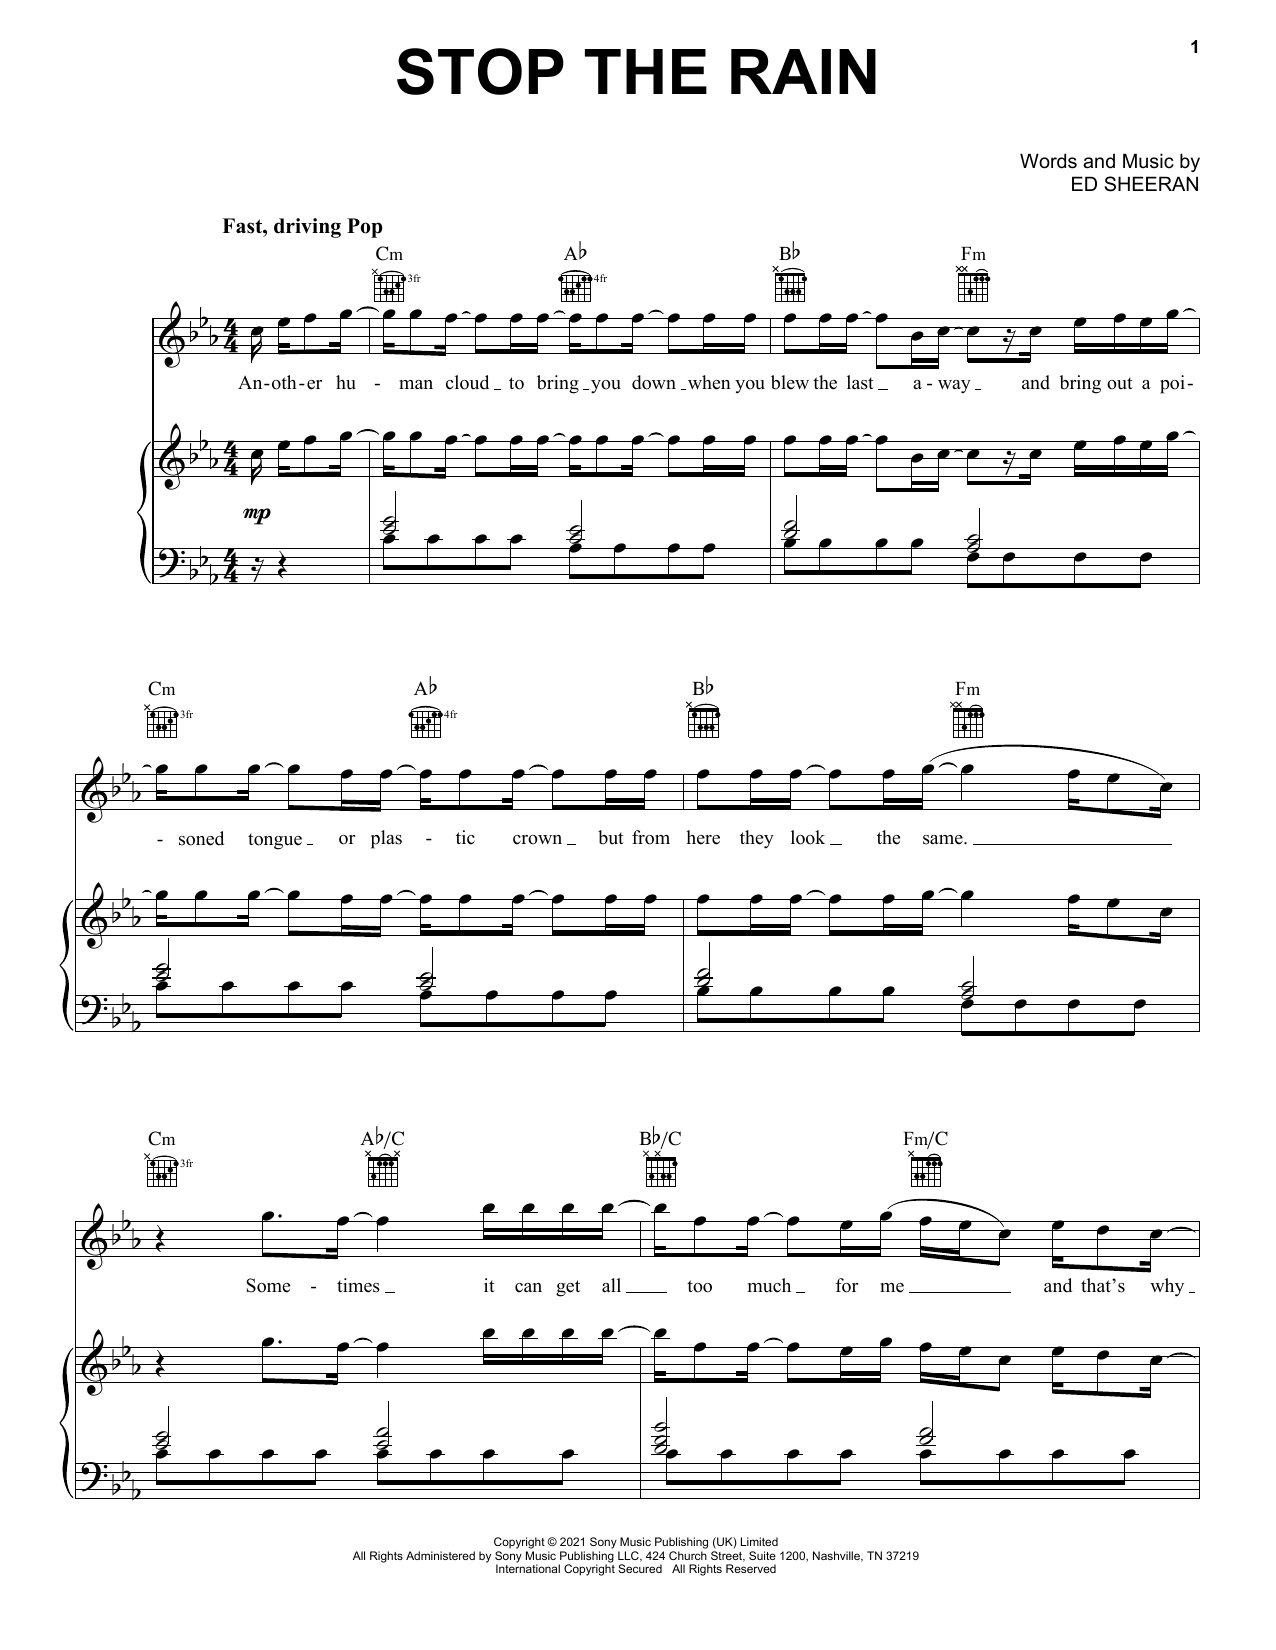 Ed Sheeran Stop The Rain Sheet Music Notes & Chords for Piano, Vocal & Guitar (Right-Hand Melody) - Download or Print PDF